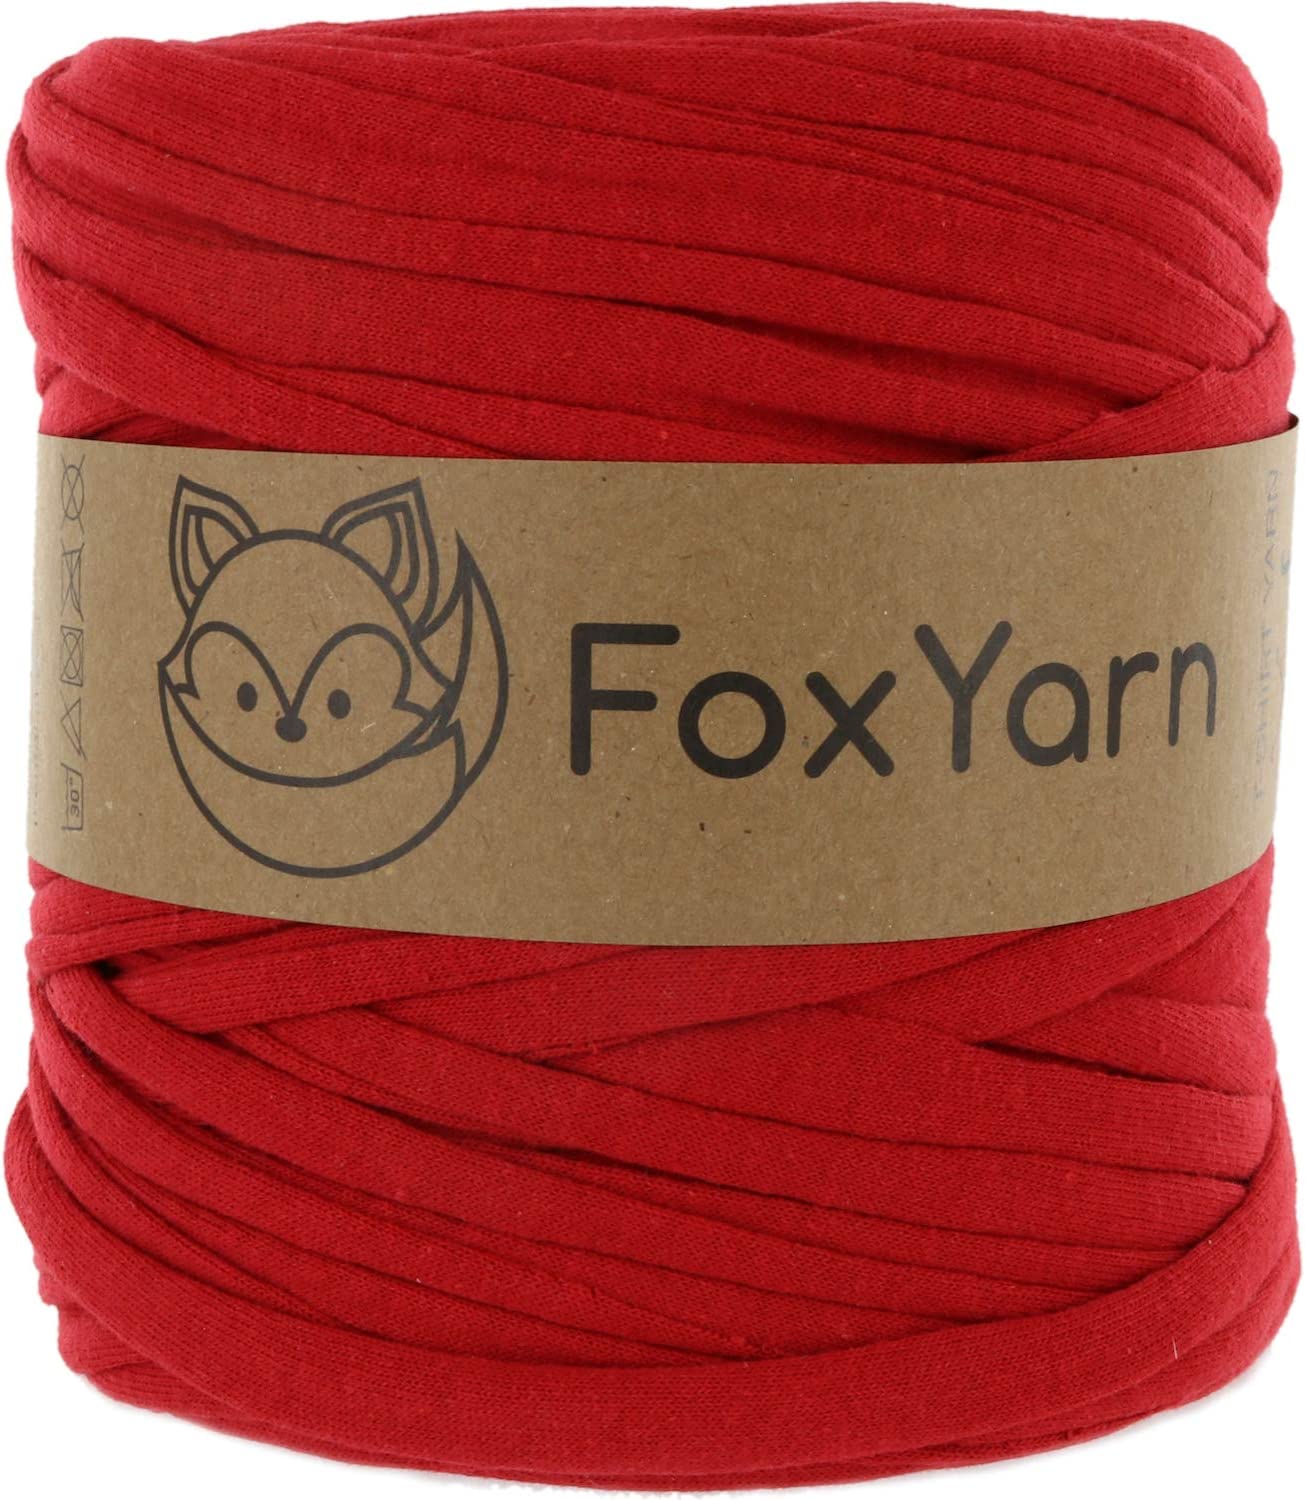 T-Shirt Yarn Cotton Fettuccini Zpagetti - Sewing Knitting Crochet T Shirt Yarn - 100 Meter - (RED)